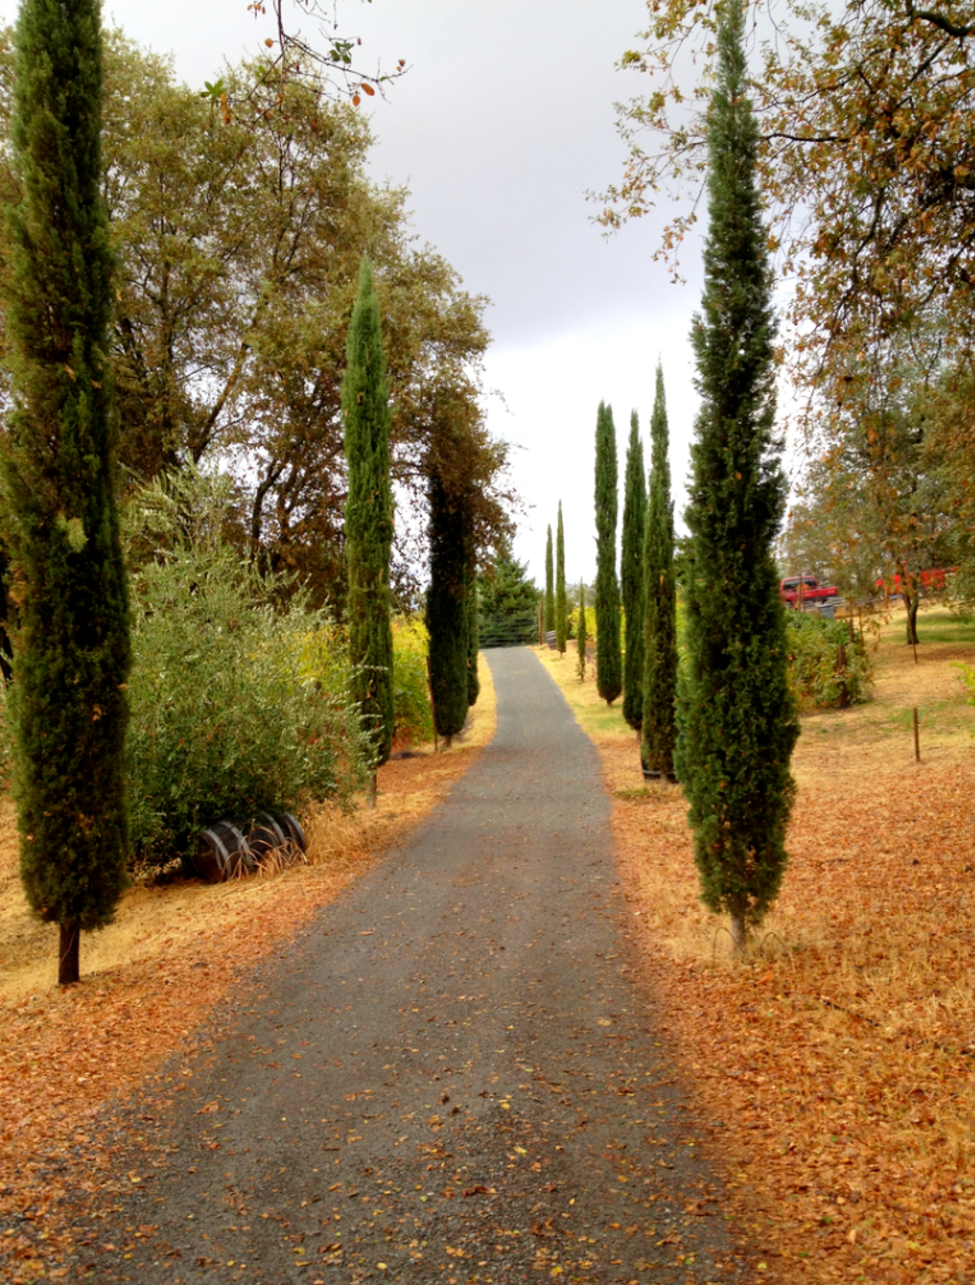 Walking path through Cypress trees and Vineyards